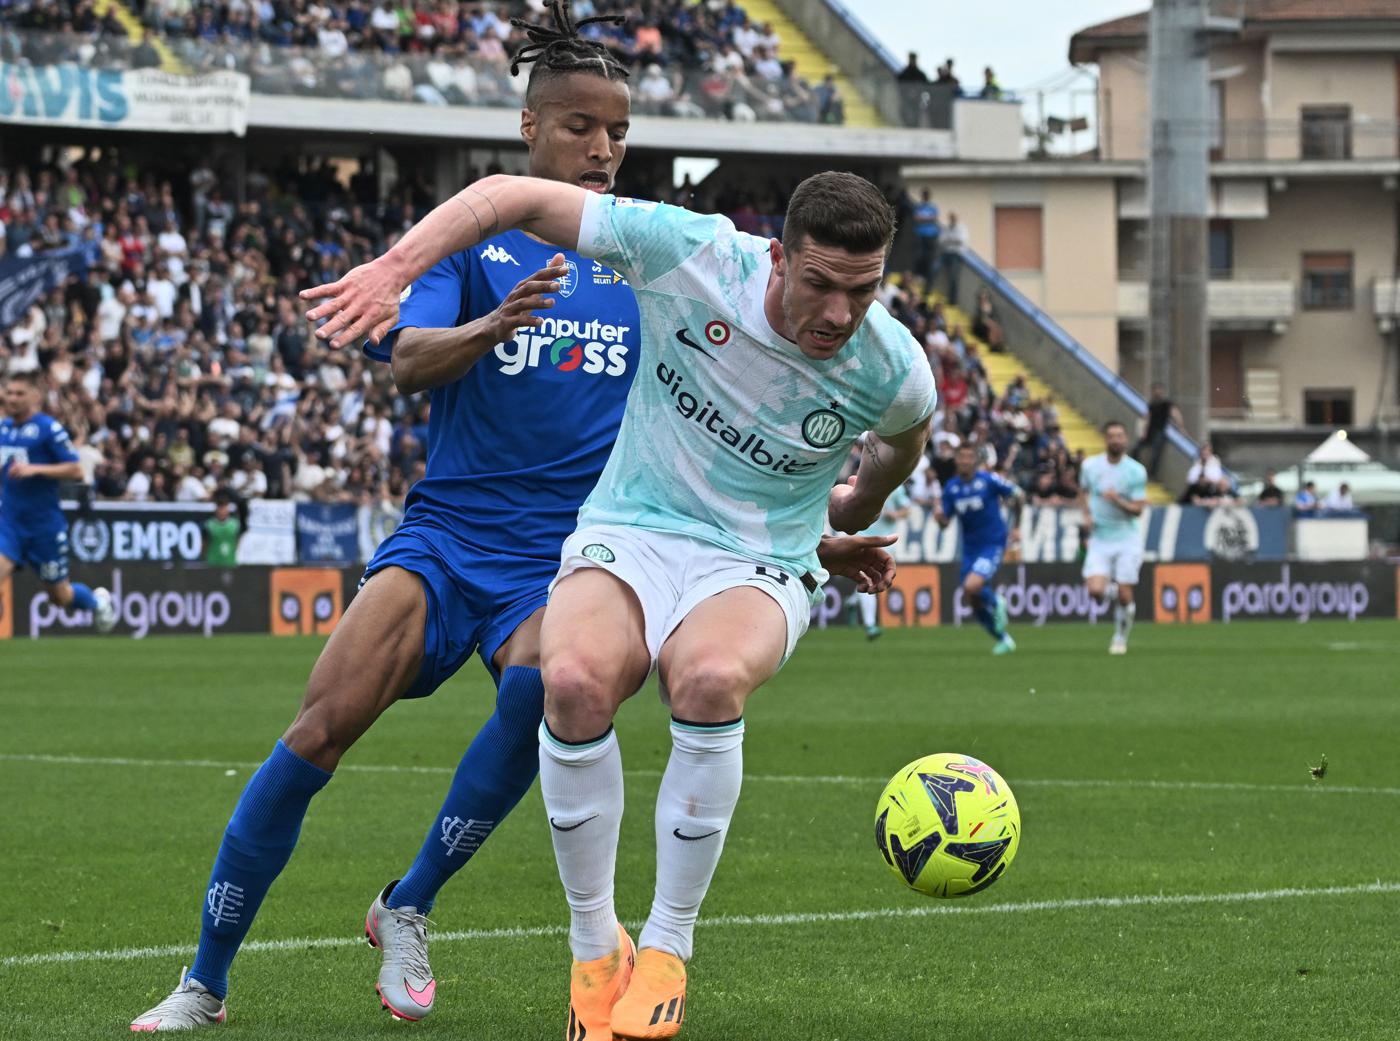 Empoli vs Inter - 0-3. Italian Championship, round of 31. Match review, statistics.